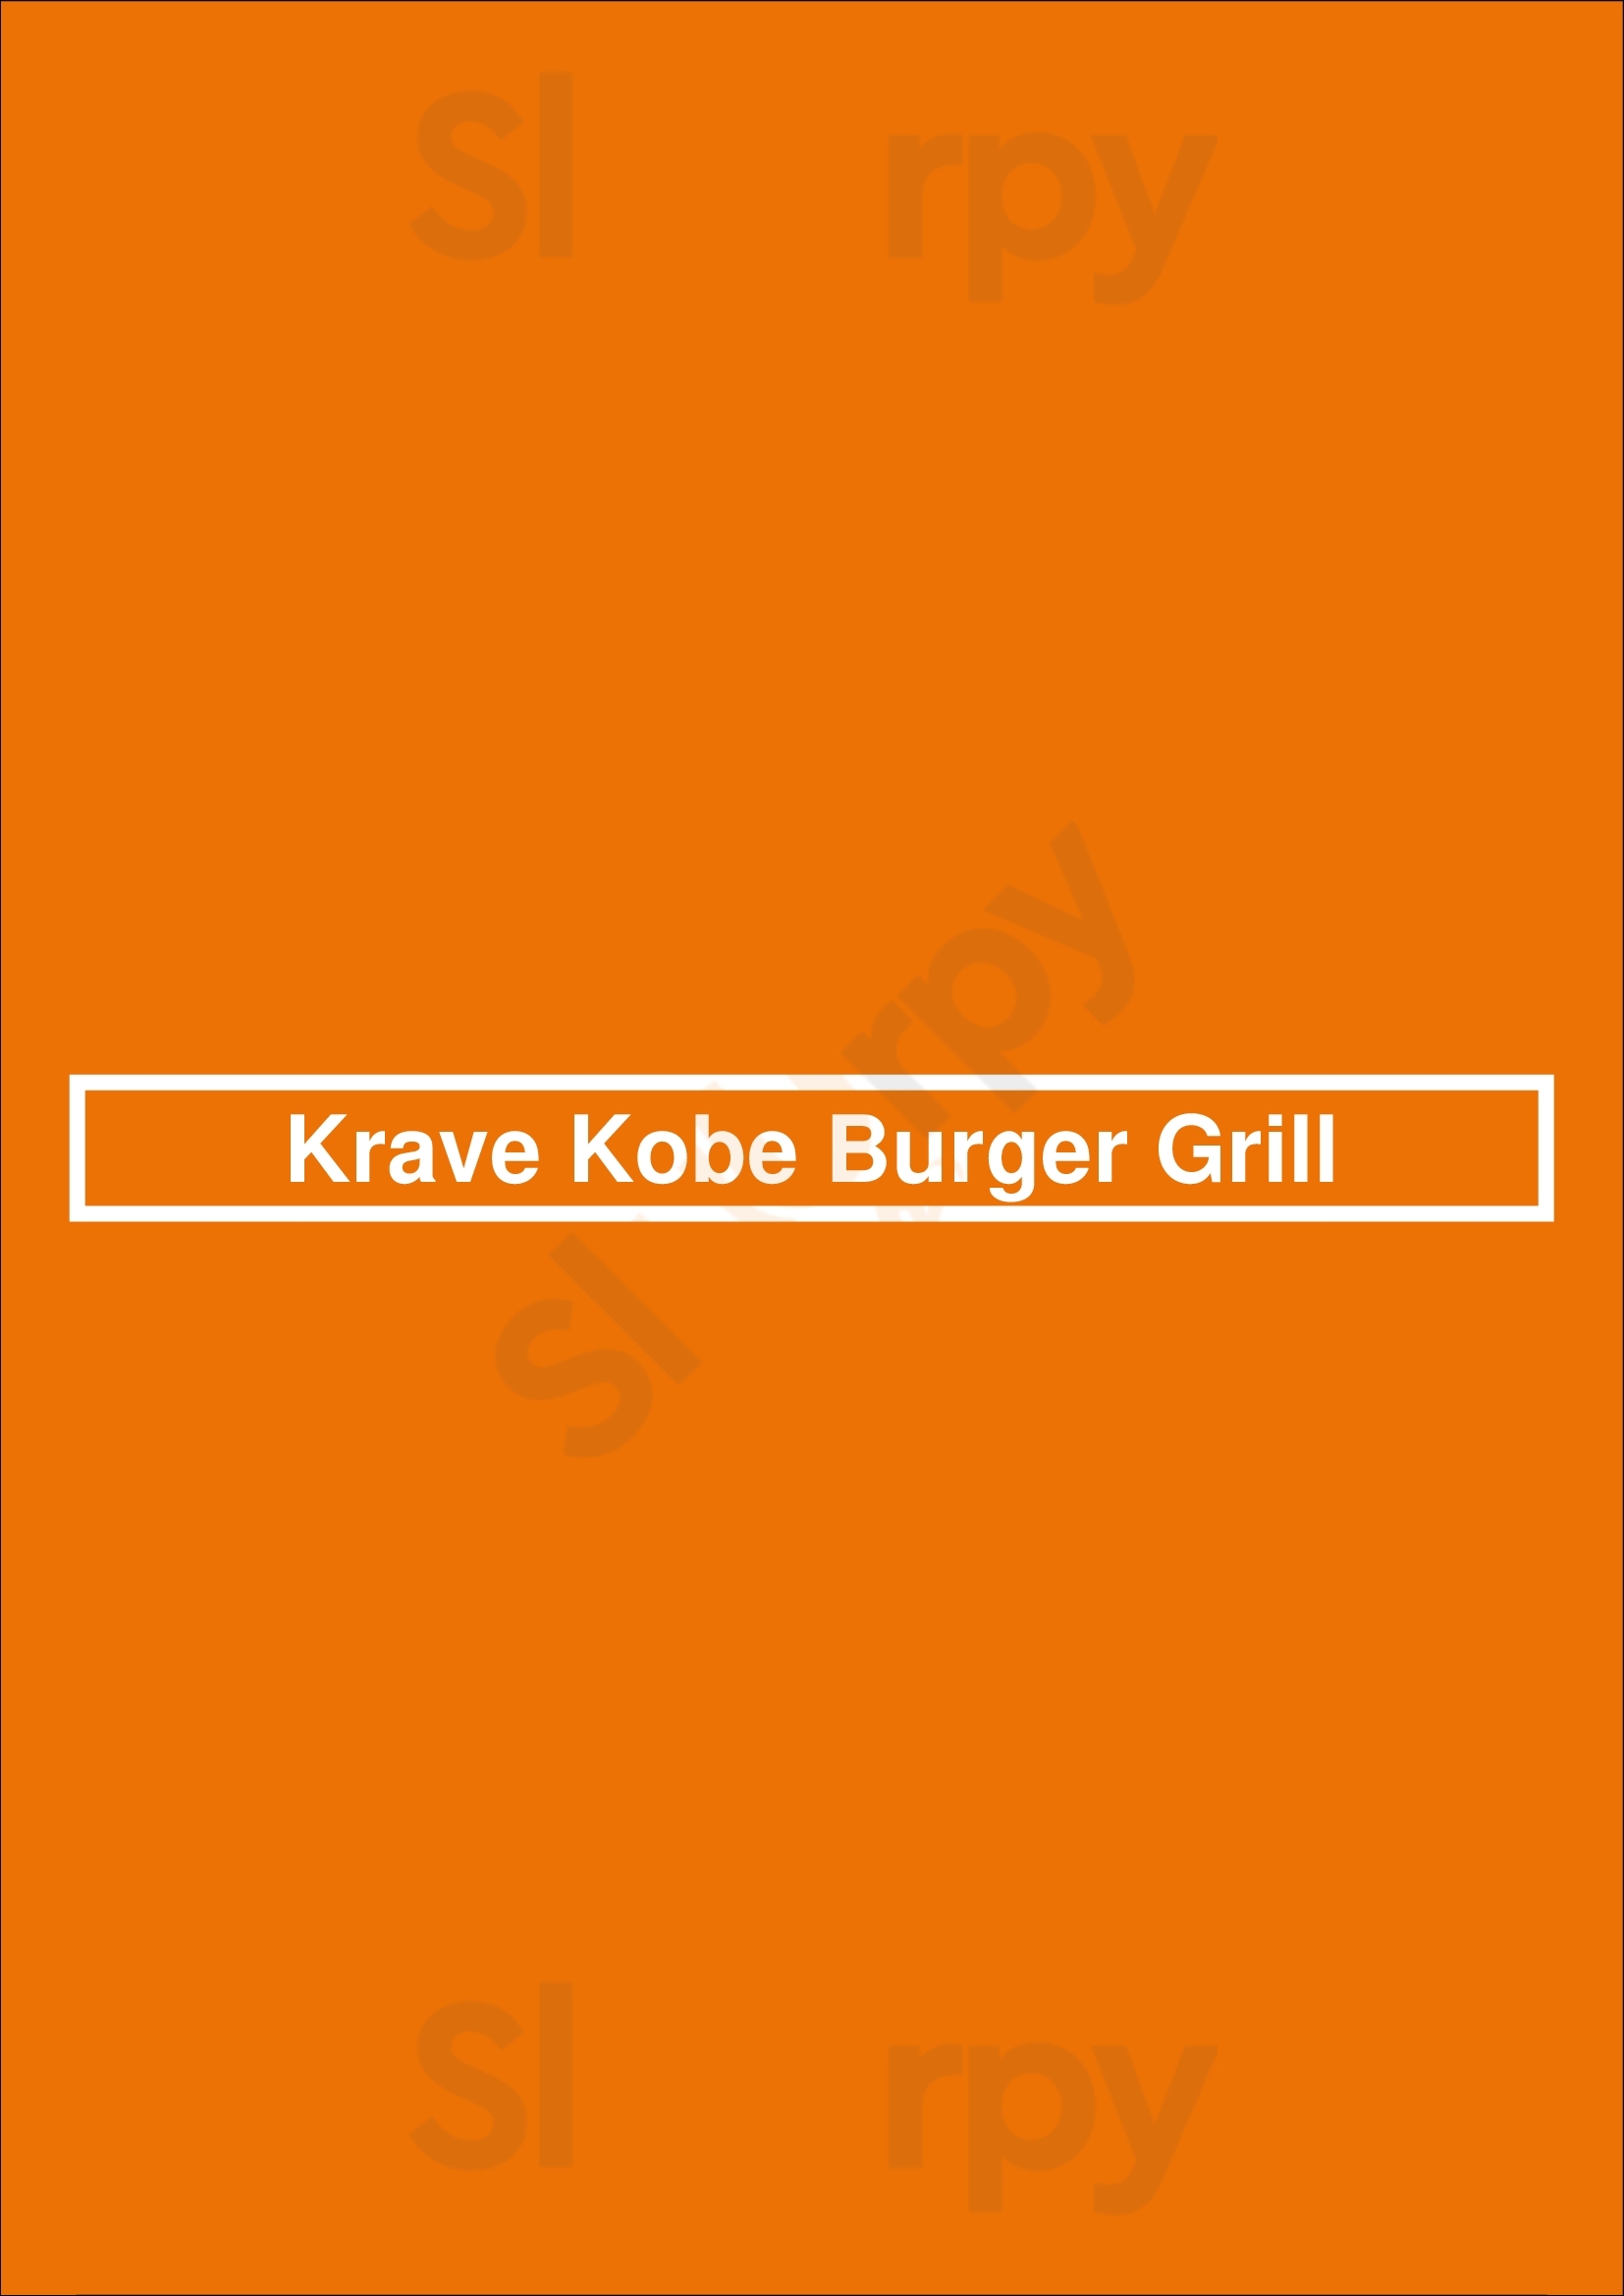 Krave Kobe Burger Grill Newport Beach Menu - 1